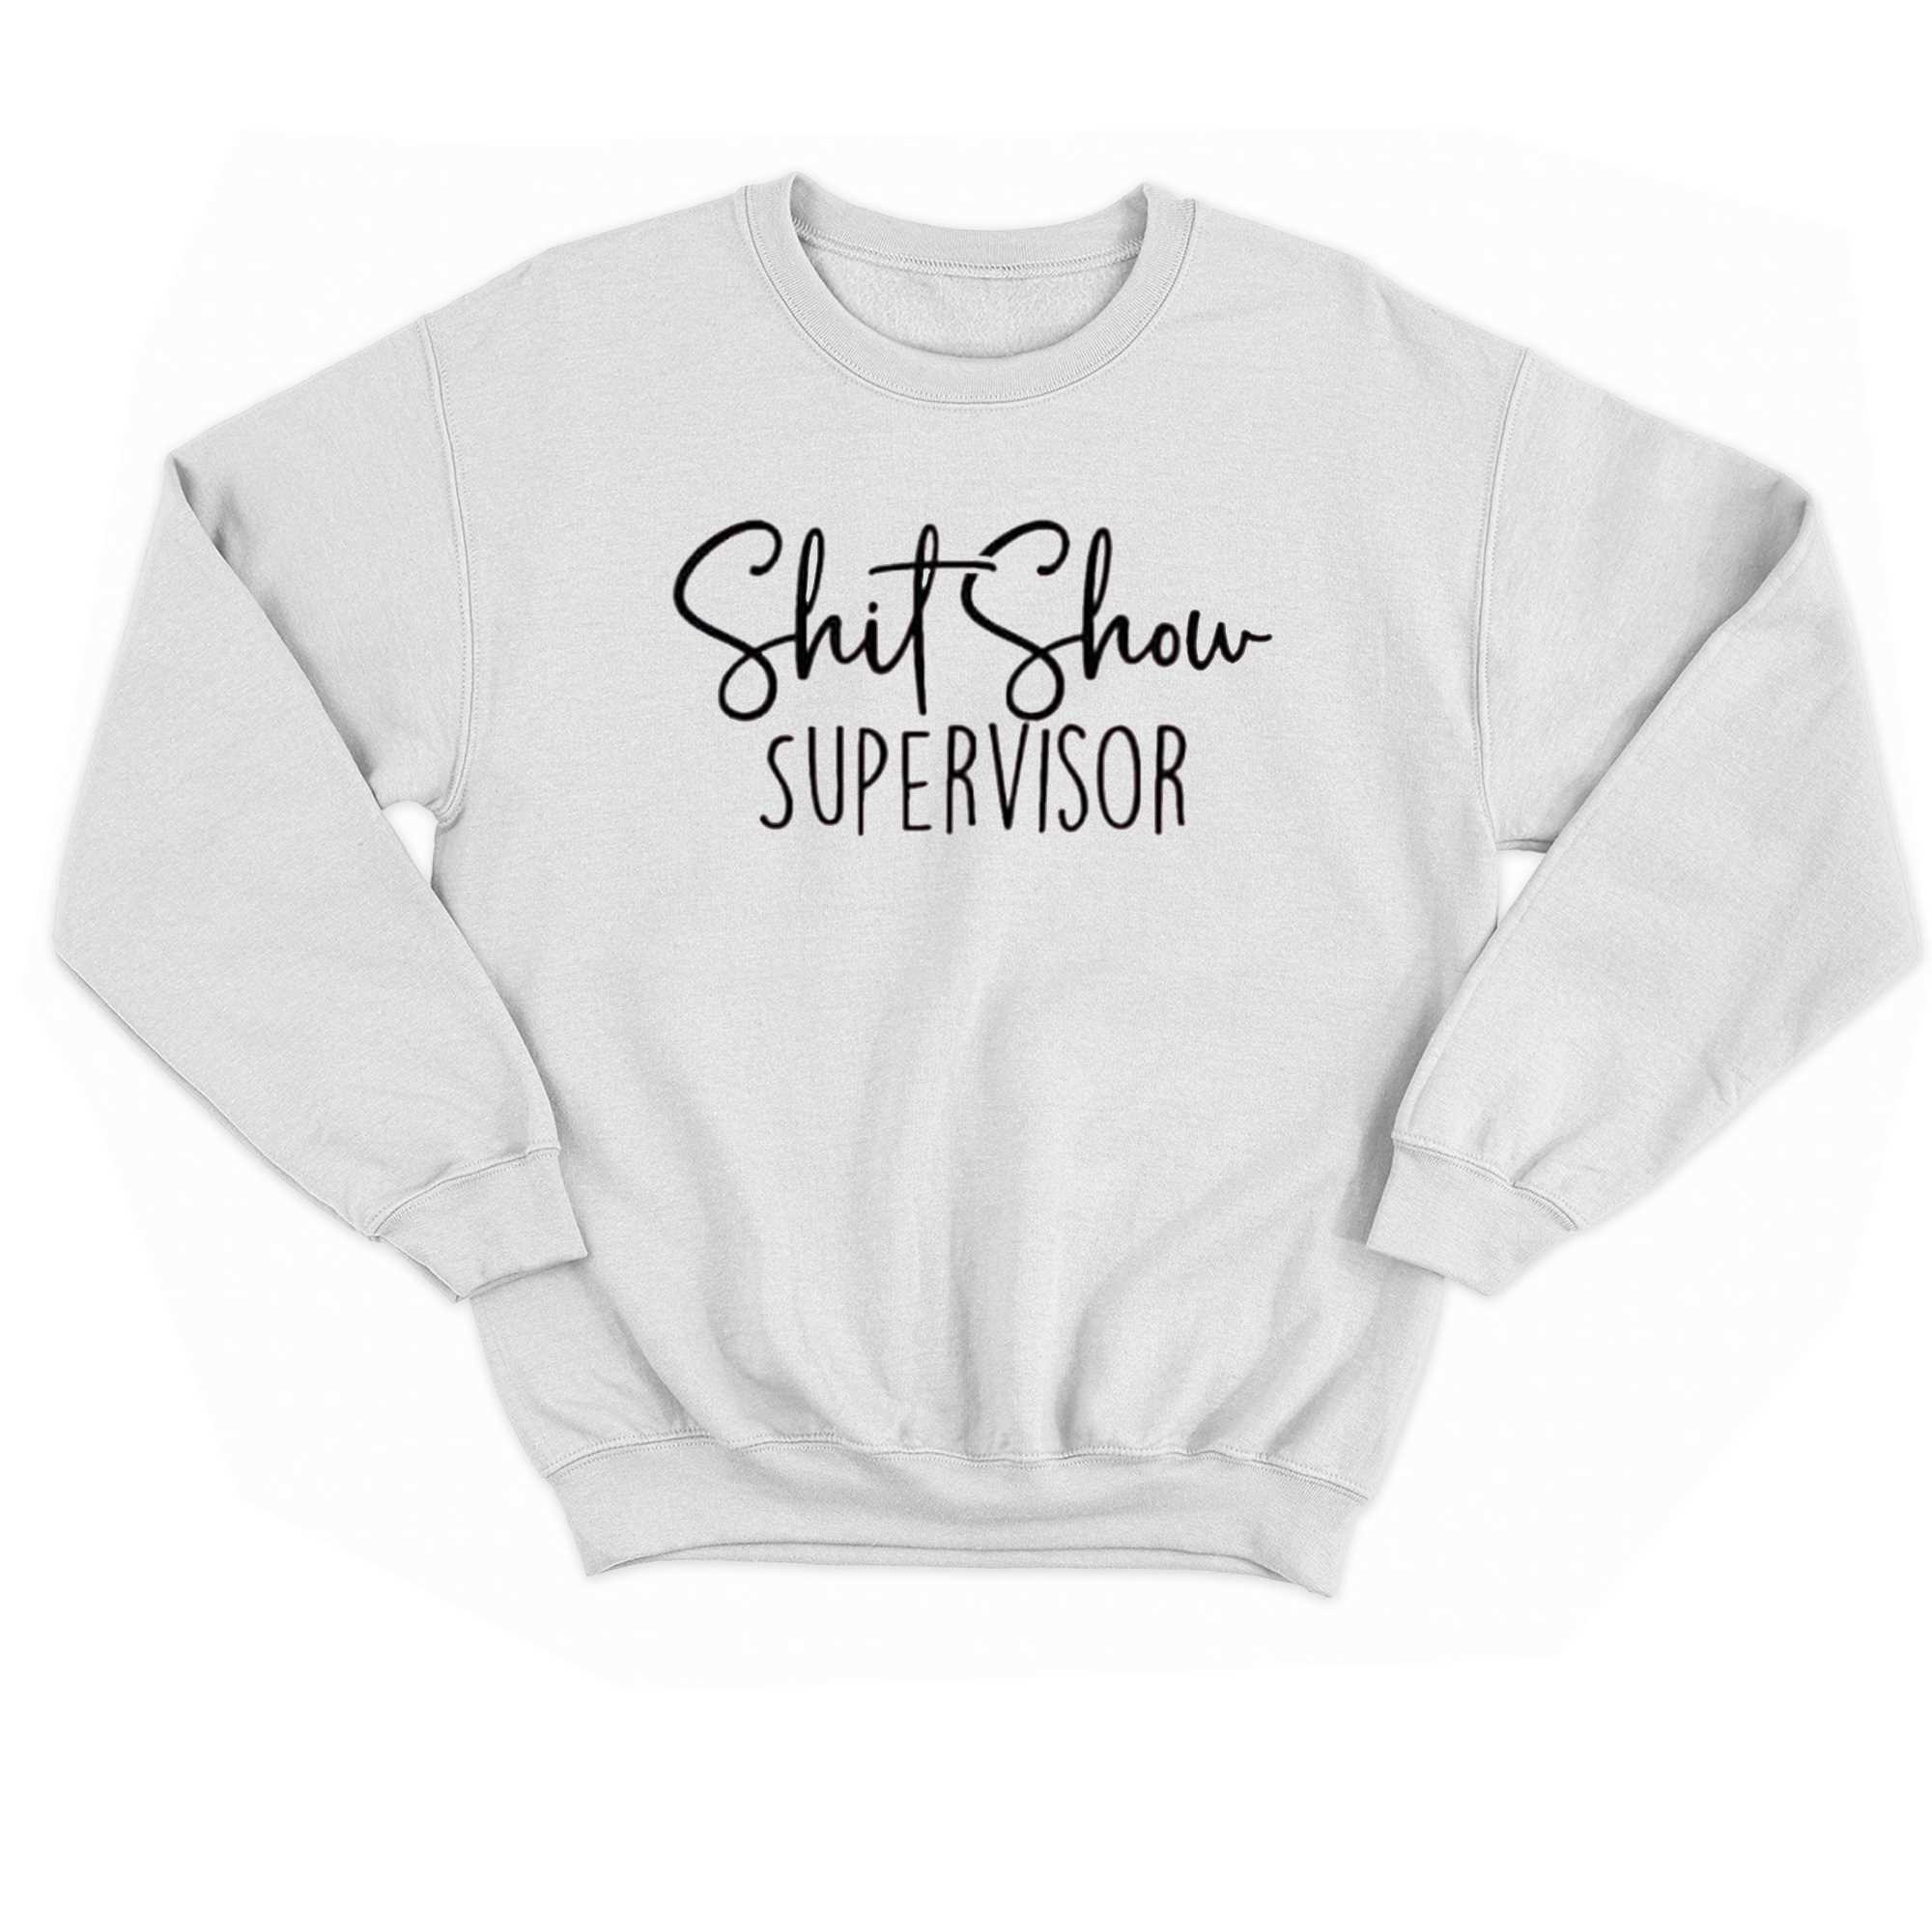 Shit Show Supervisor T-shirt 